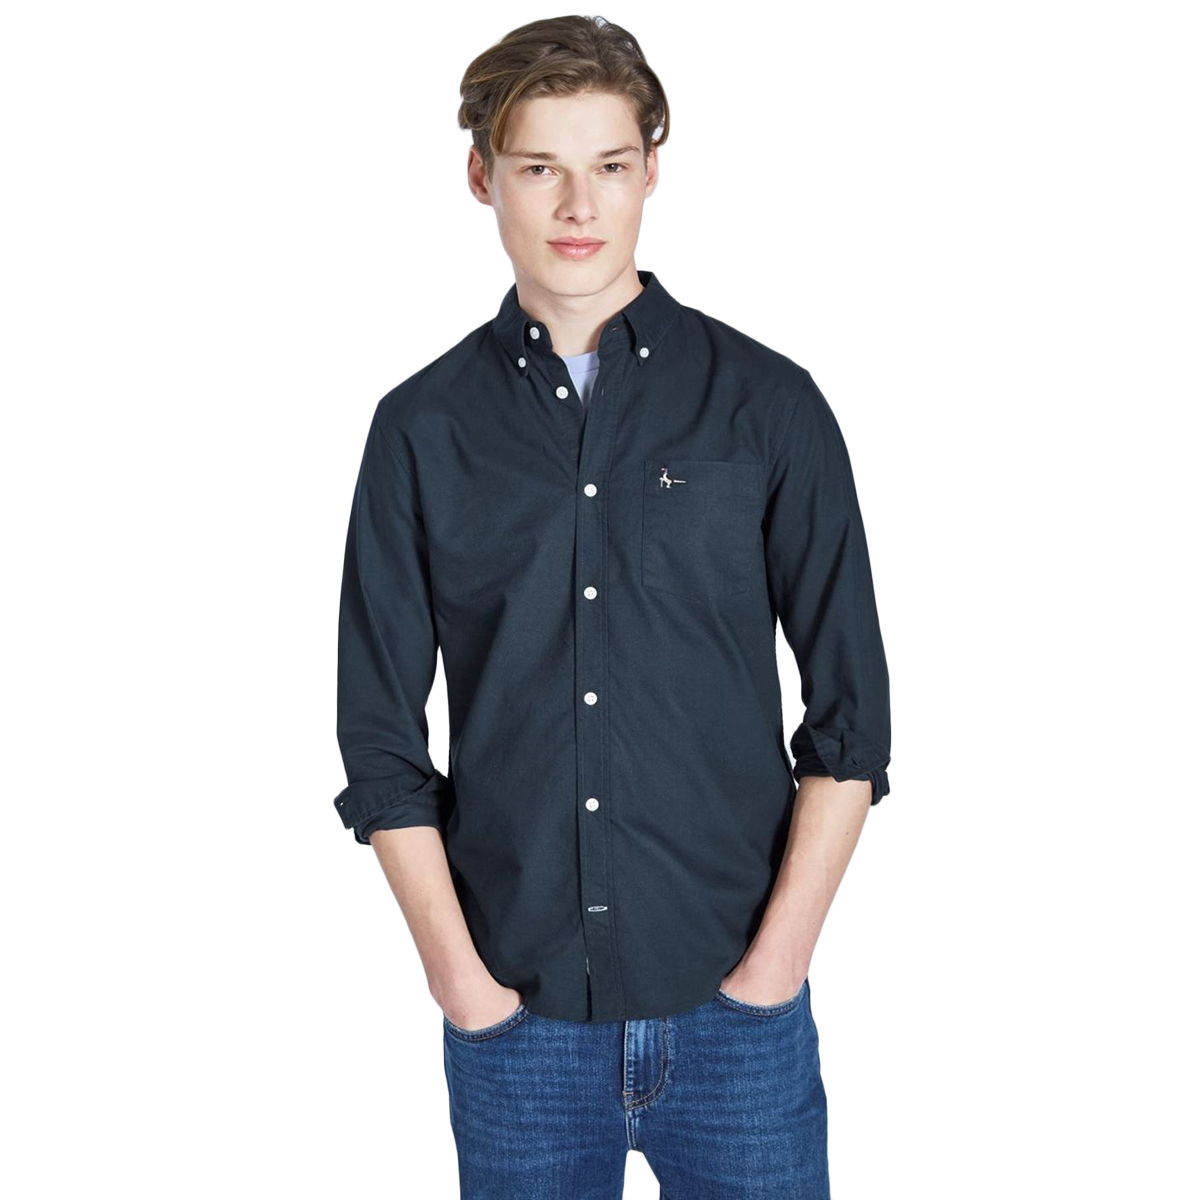 Jack Wills Men's Wadsworth Plain Oxford Shirt - Black, L